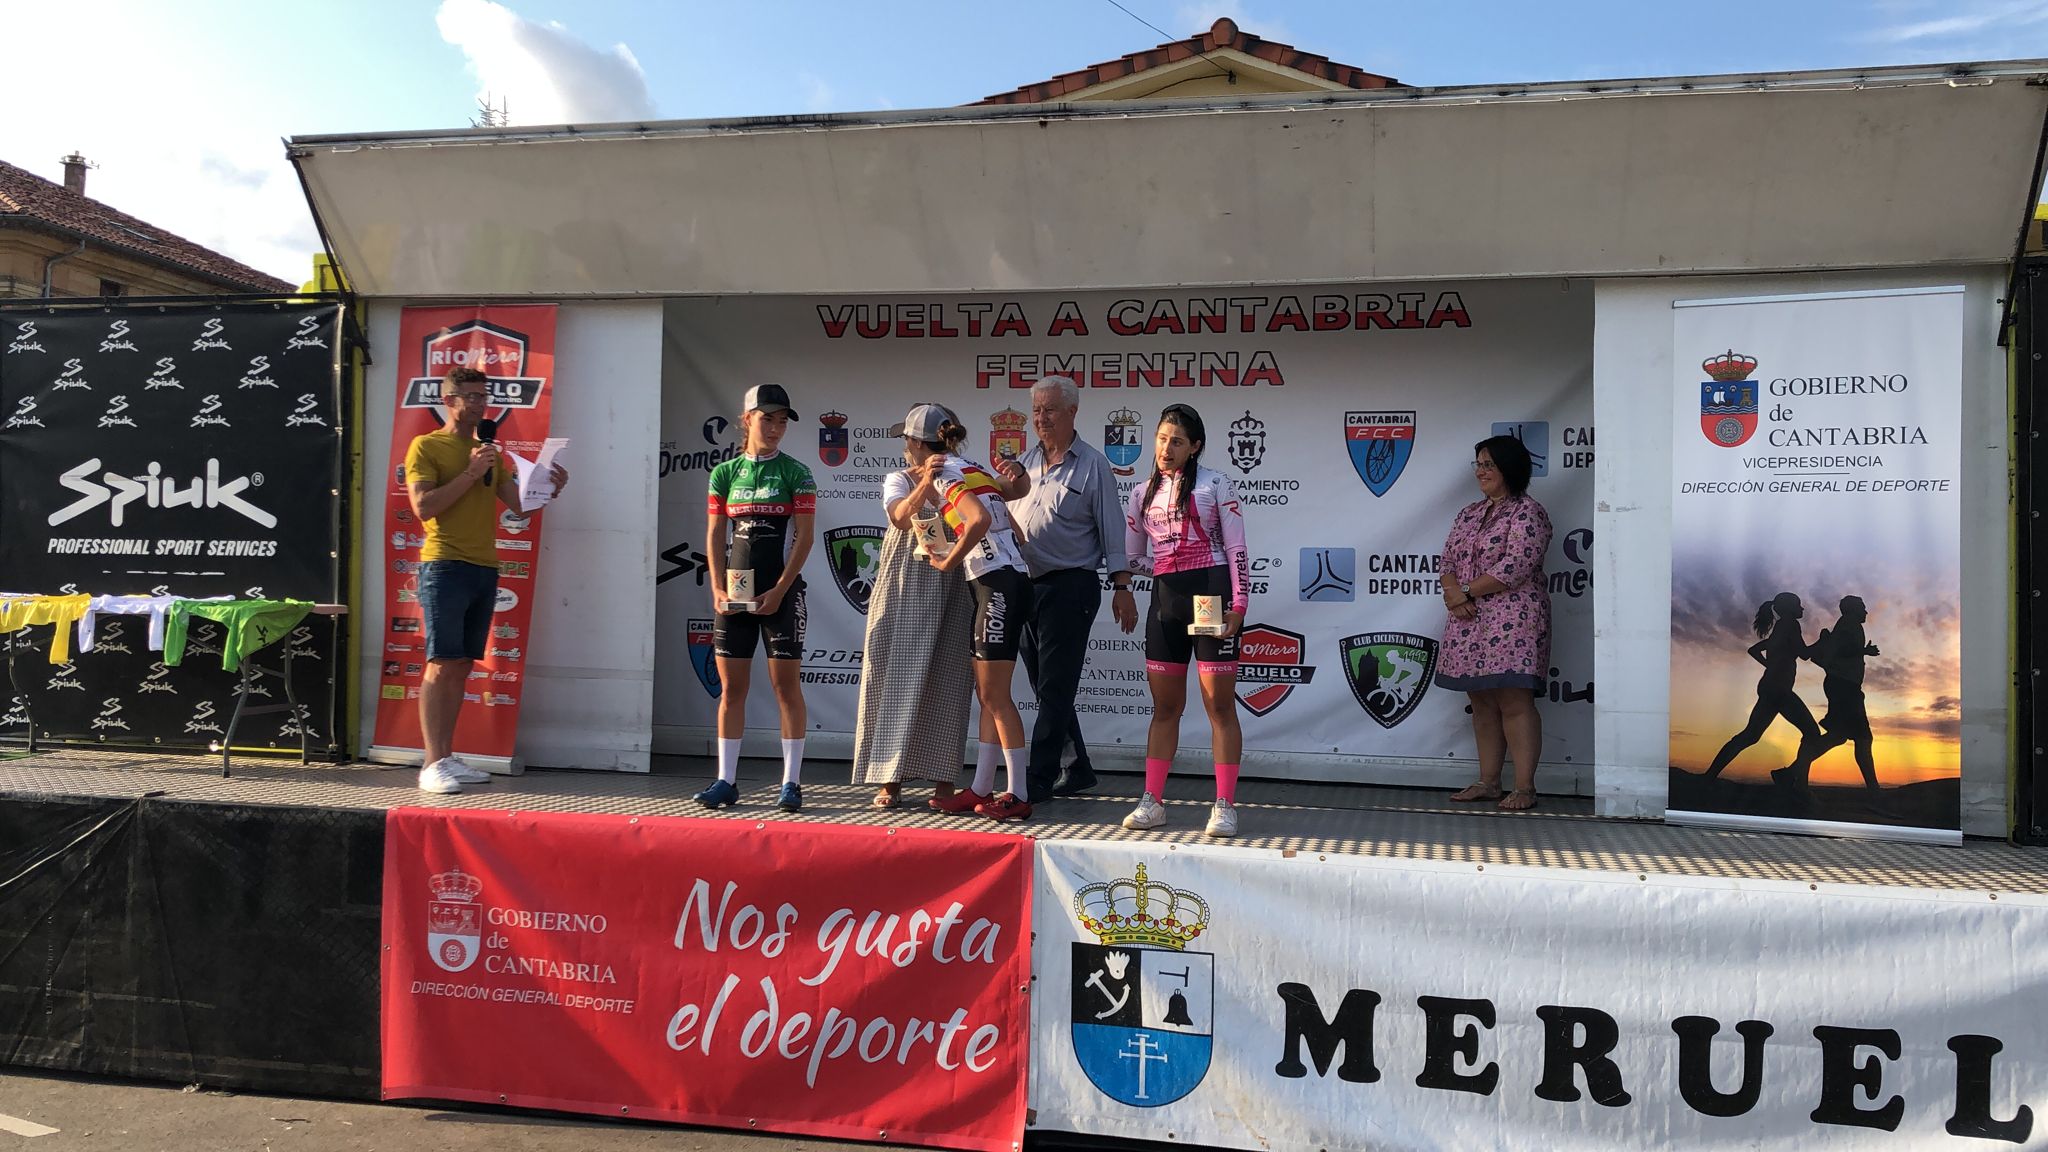 Paula Ostiz y Laura Ruiz encarrilan la Vuelta a Cantabria Femenina